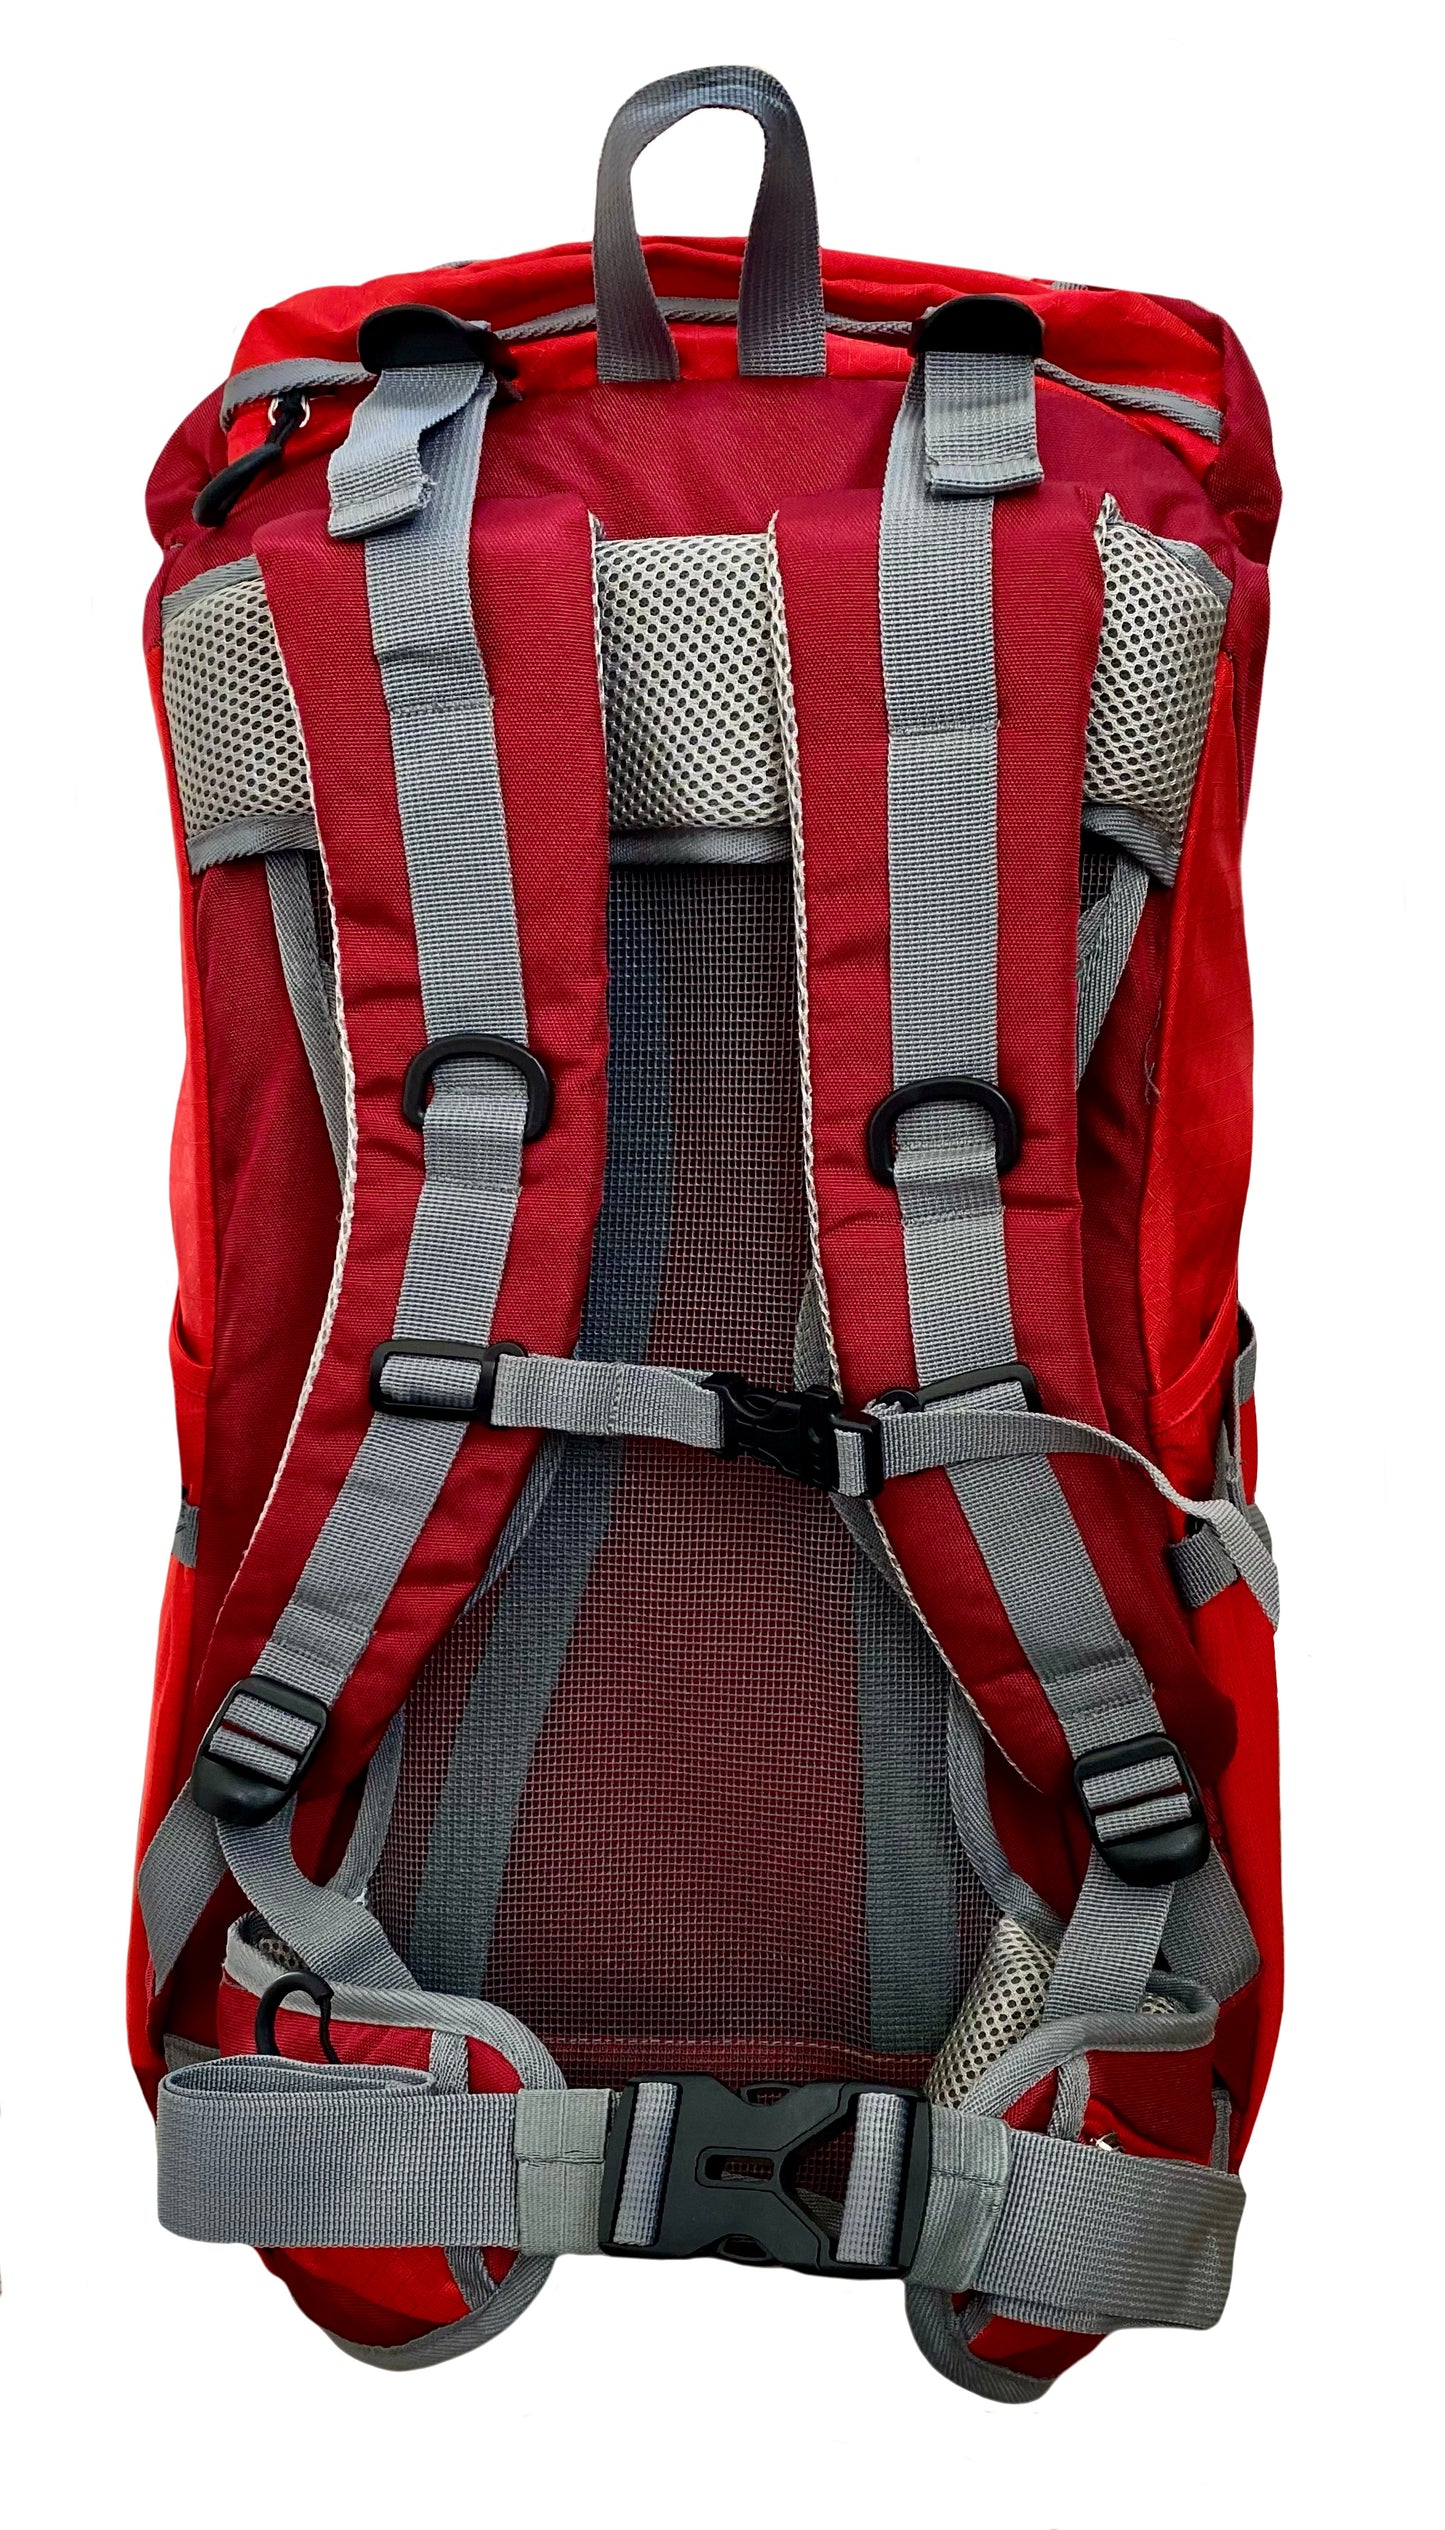 Kinetic 40 Liter Hiking Backpack (Red)